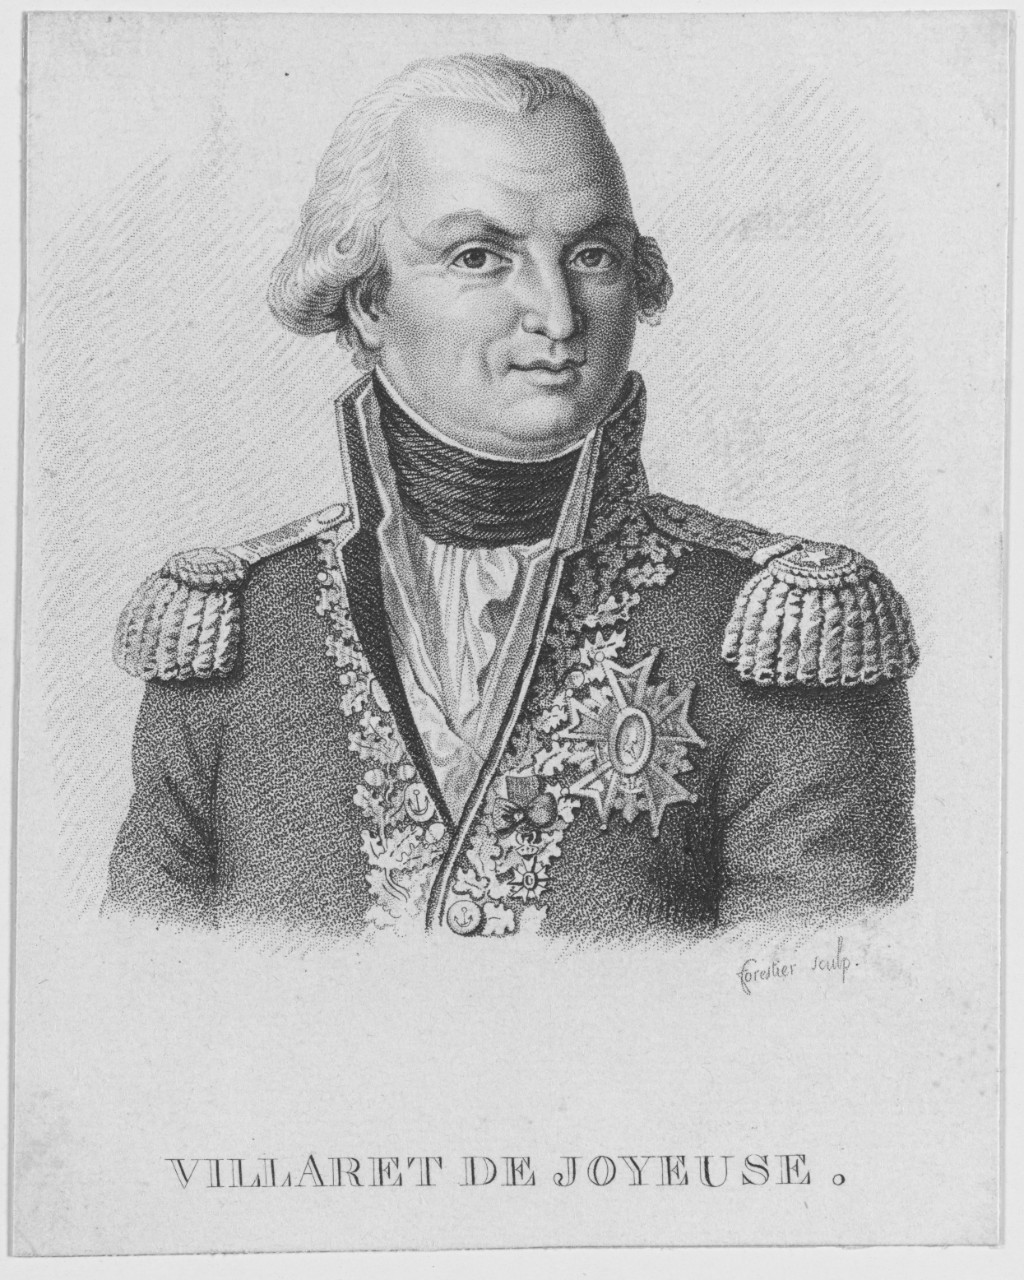 Vice Admiral Louis Thomas Villaret de Joyeuse. 1750-1812